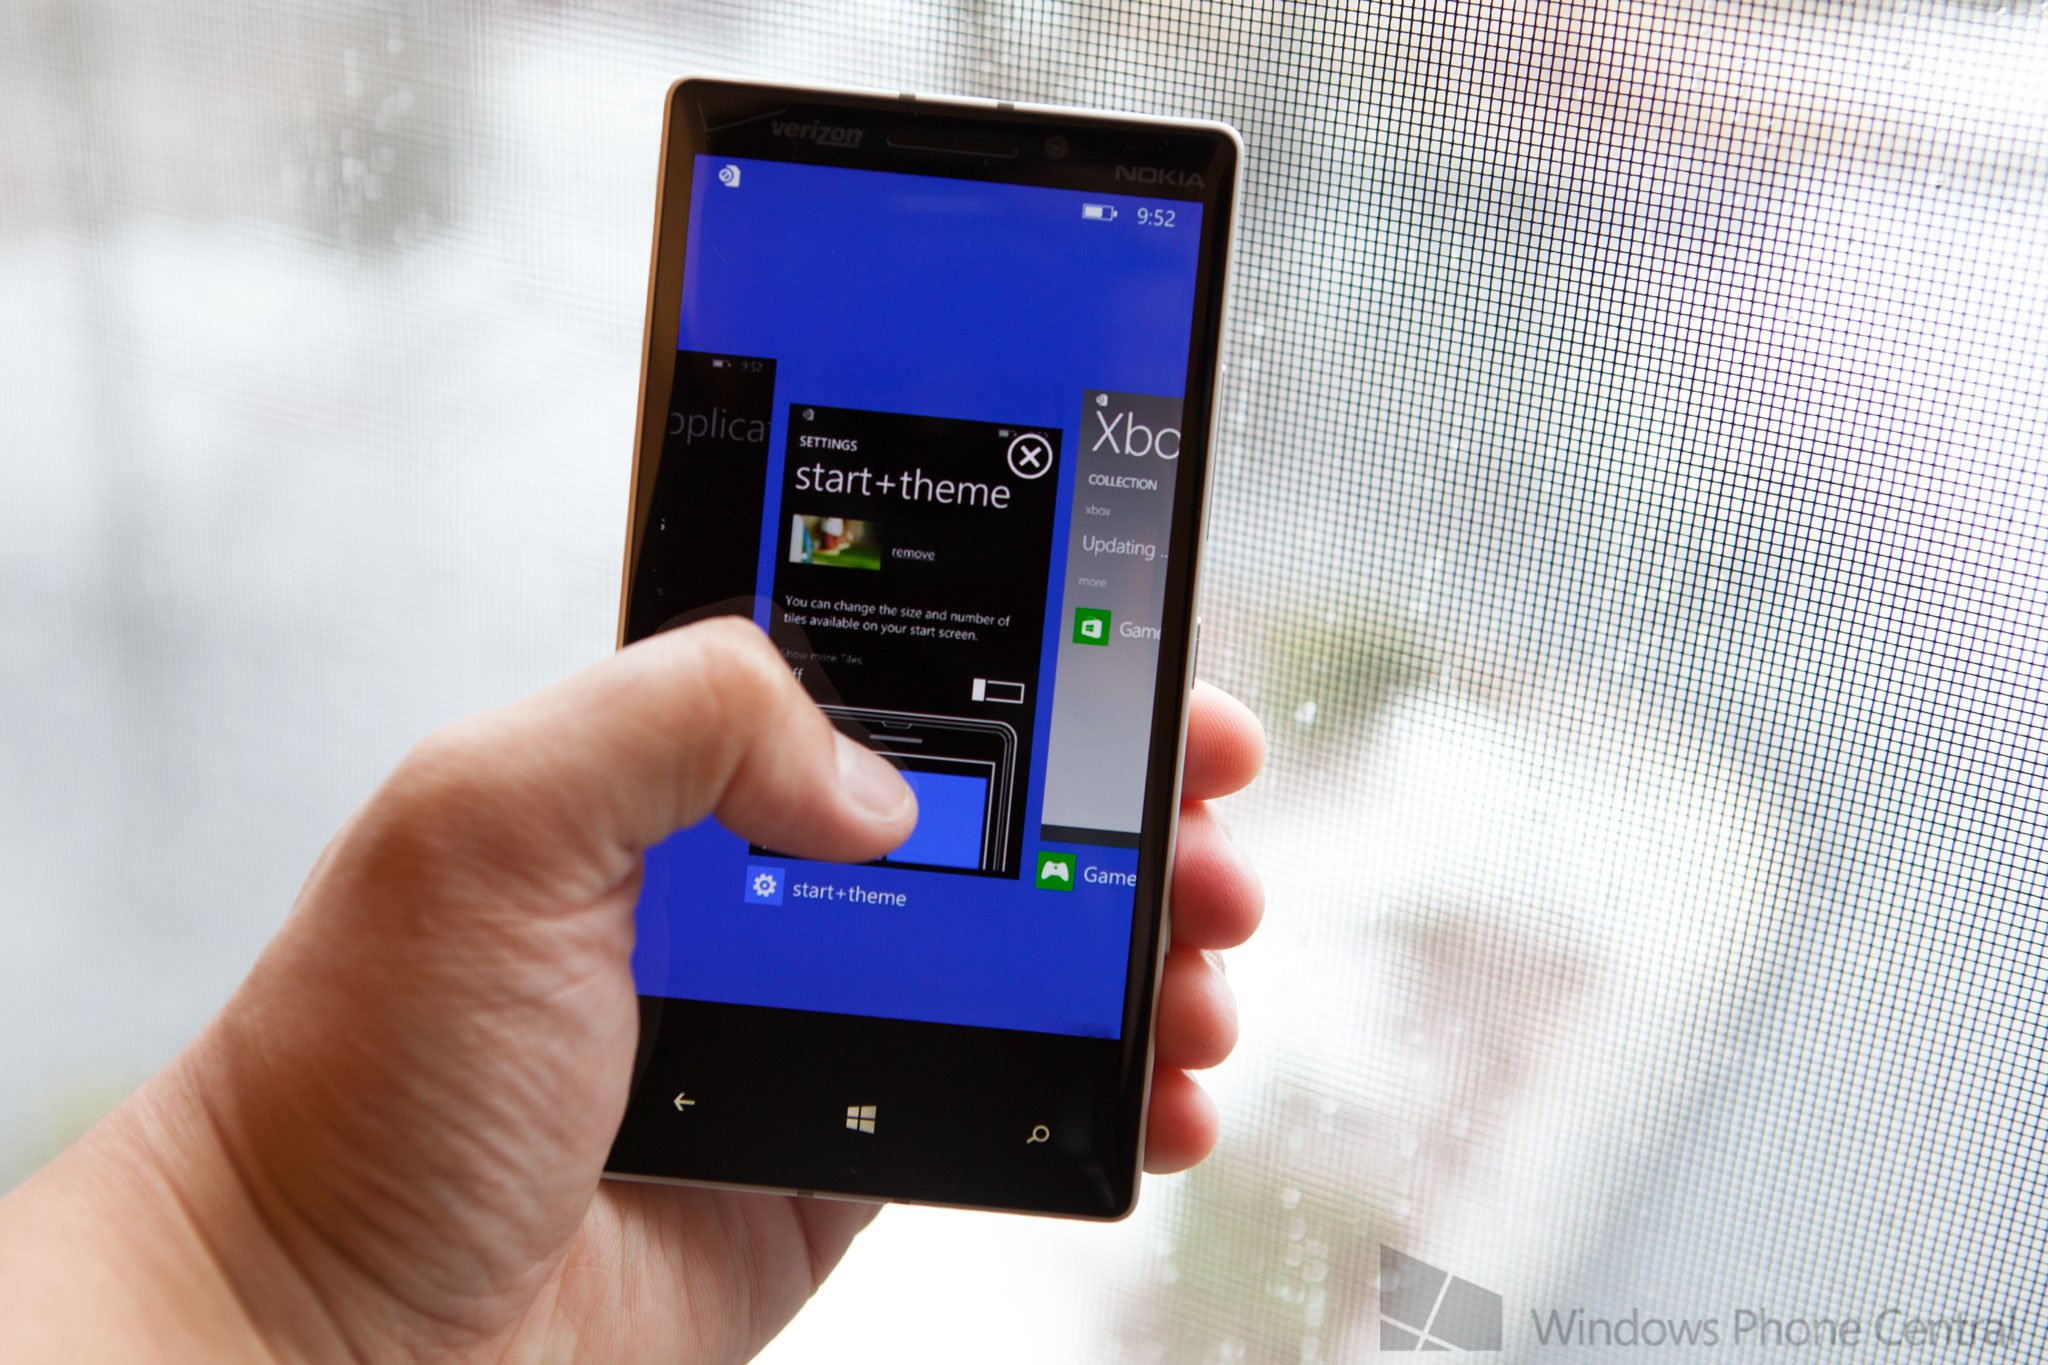 Windows Phone 8.1 Preview for Developers Program should go live Thursday, April 10